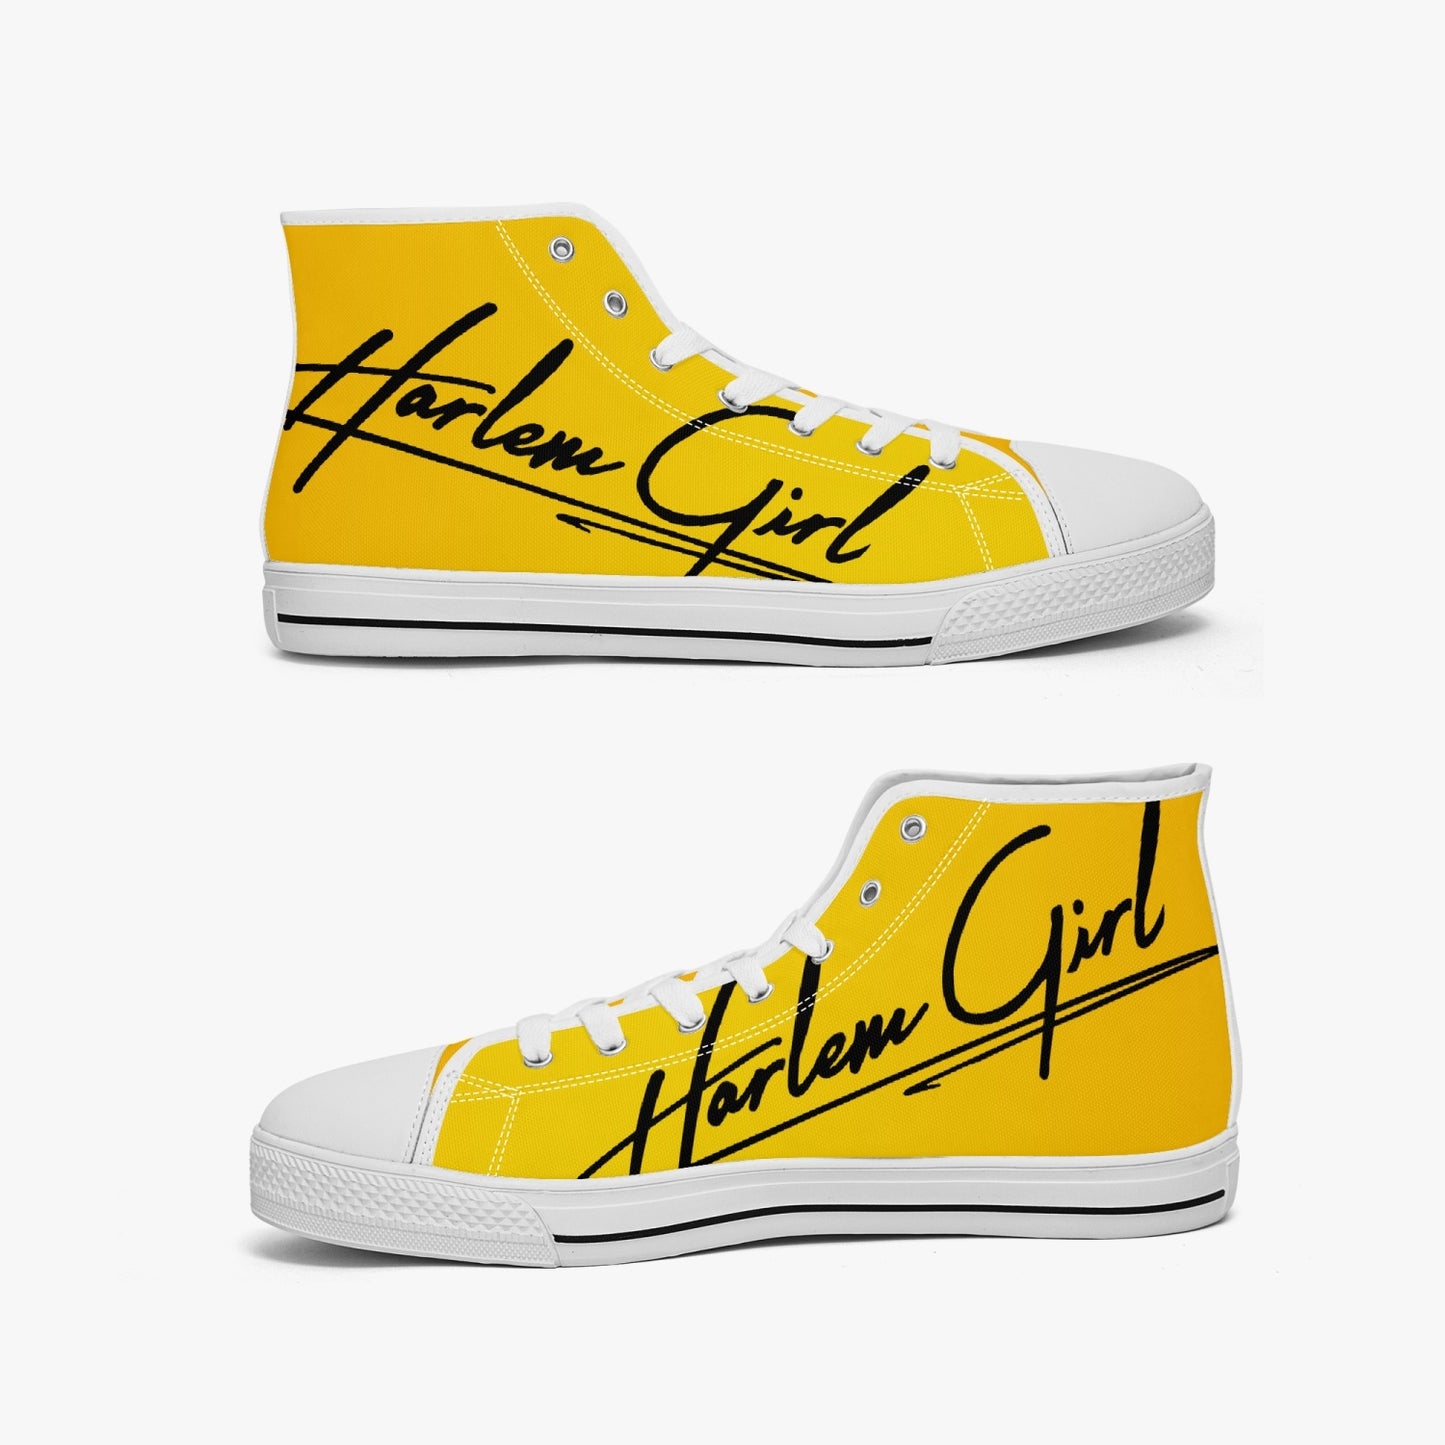 HB Harlem Girl "Lenox Ave" Classic High Top - Gold - Women (Black or White Soles)